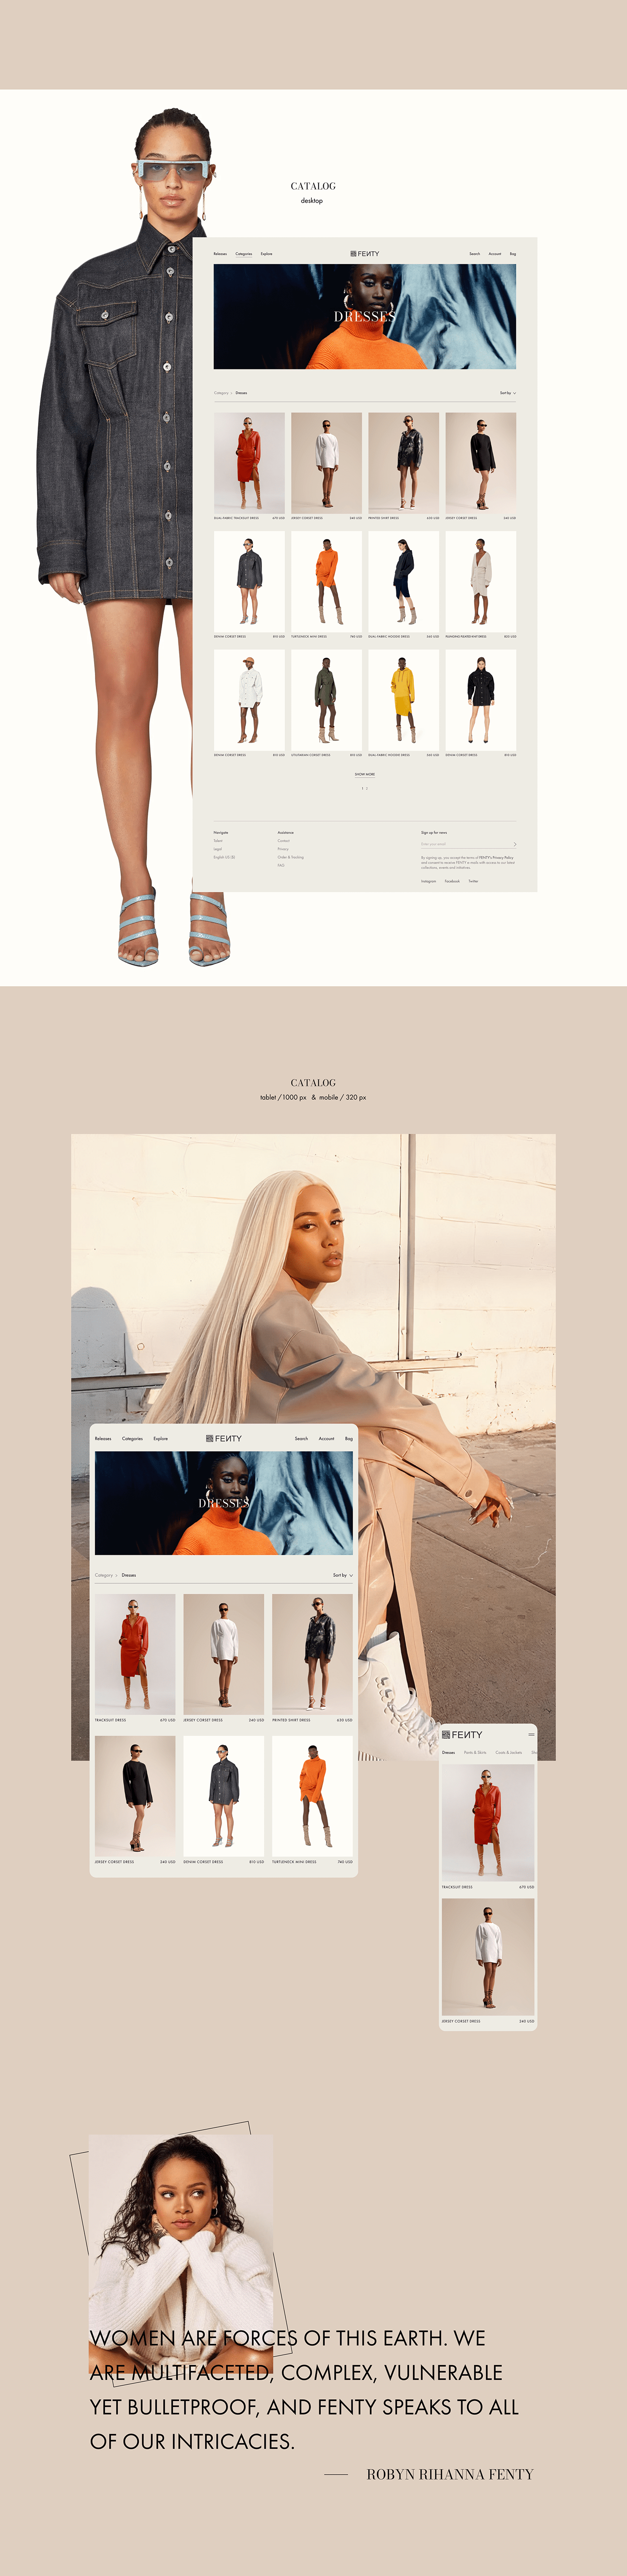 FENTY — website redesign on Behance